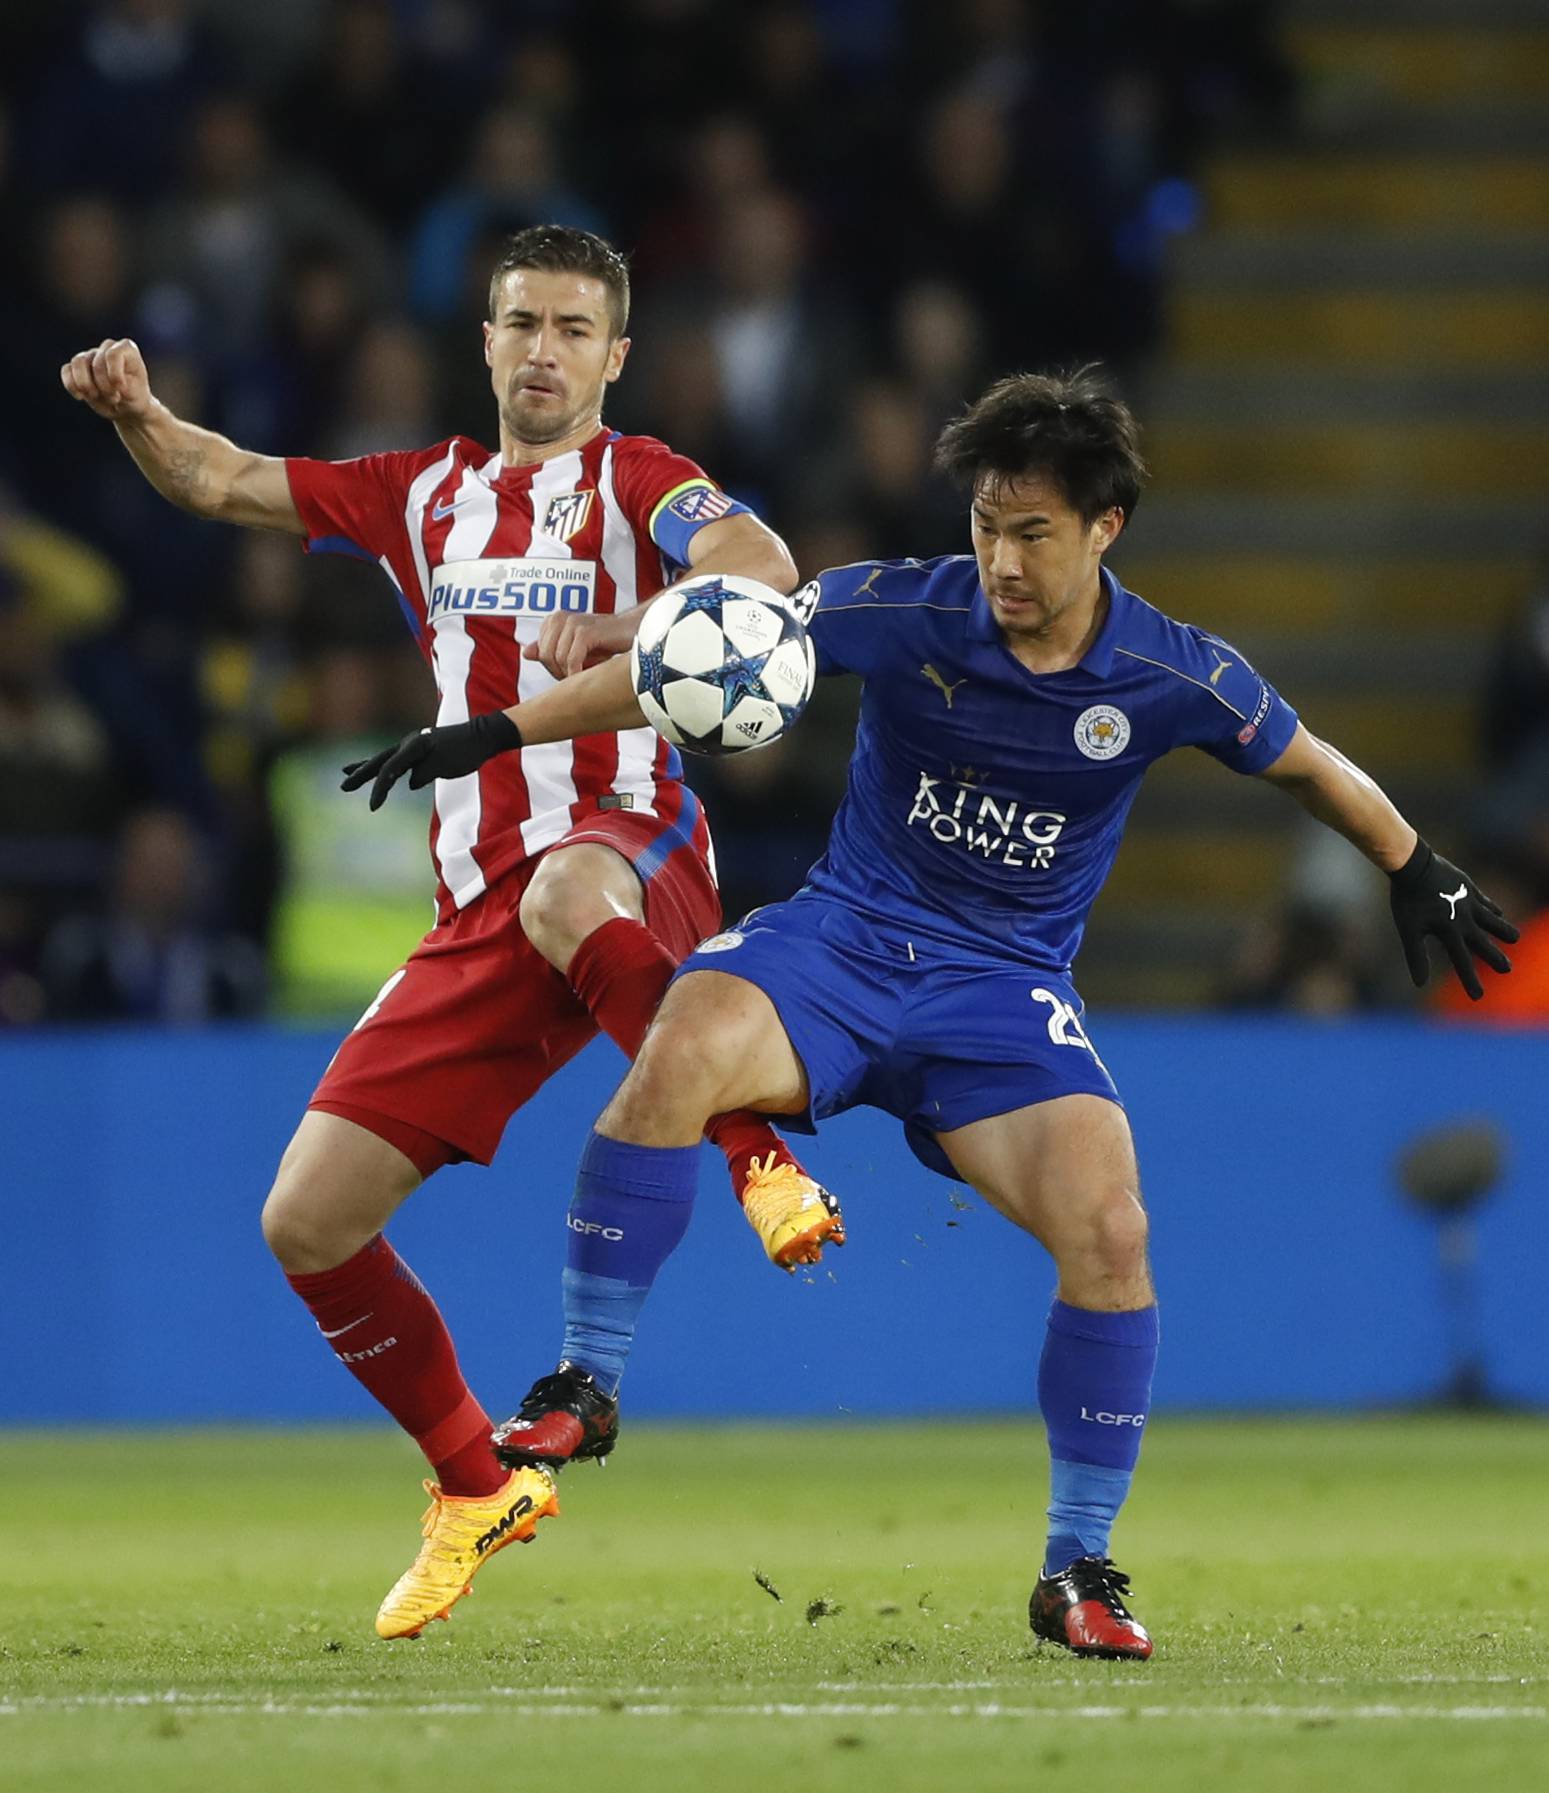 Atletico Madrid's Gabi in action with Leicester City's Shinji Okazaki